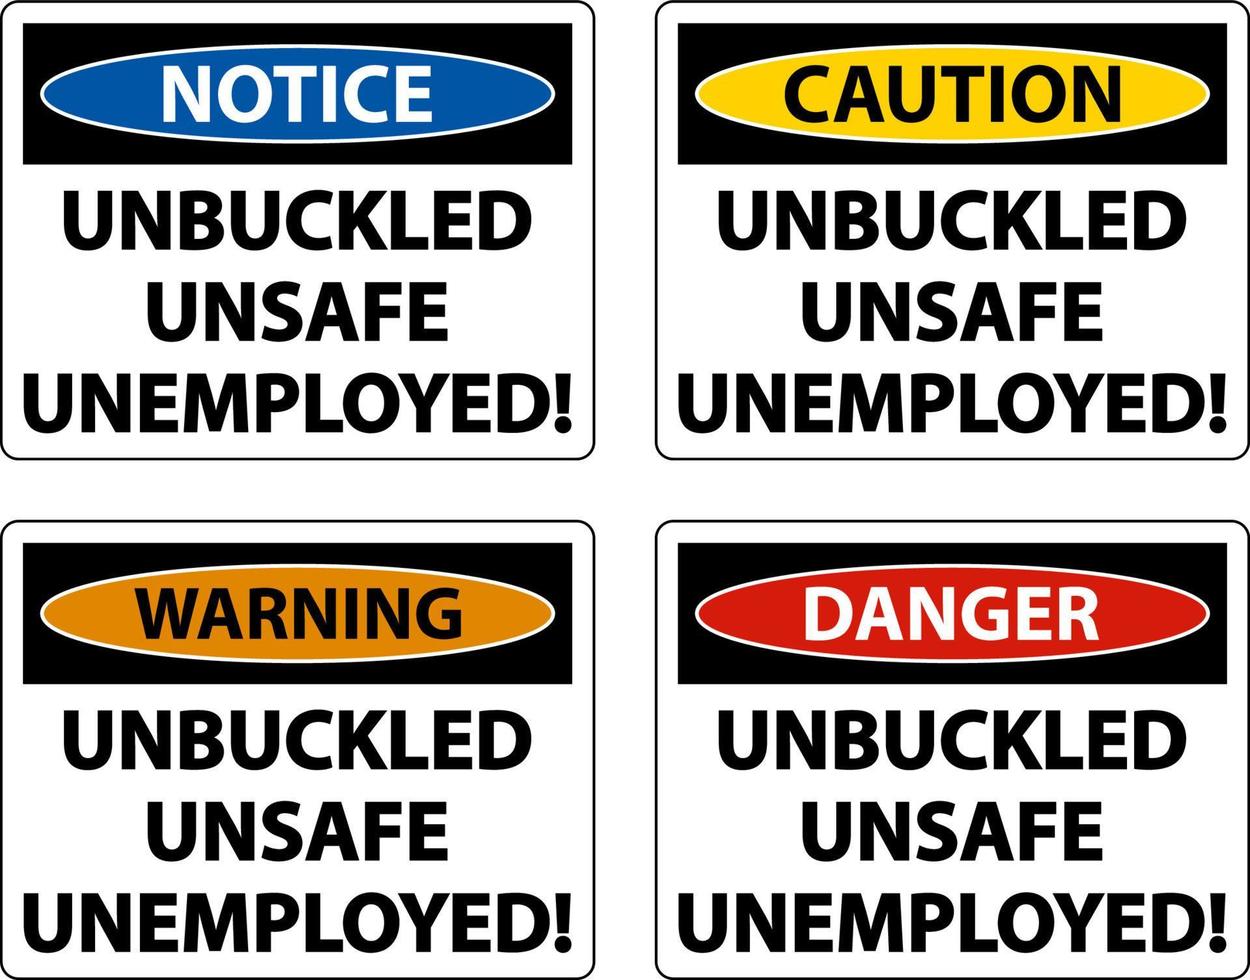 Unbuckled Unsafe Unemployed Sign On White Background vector